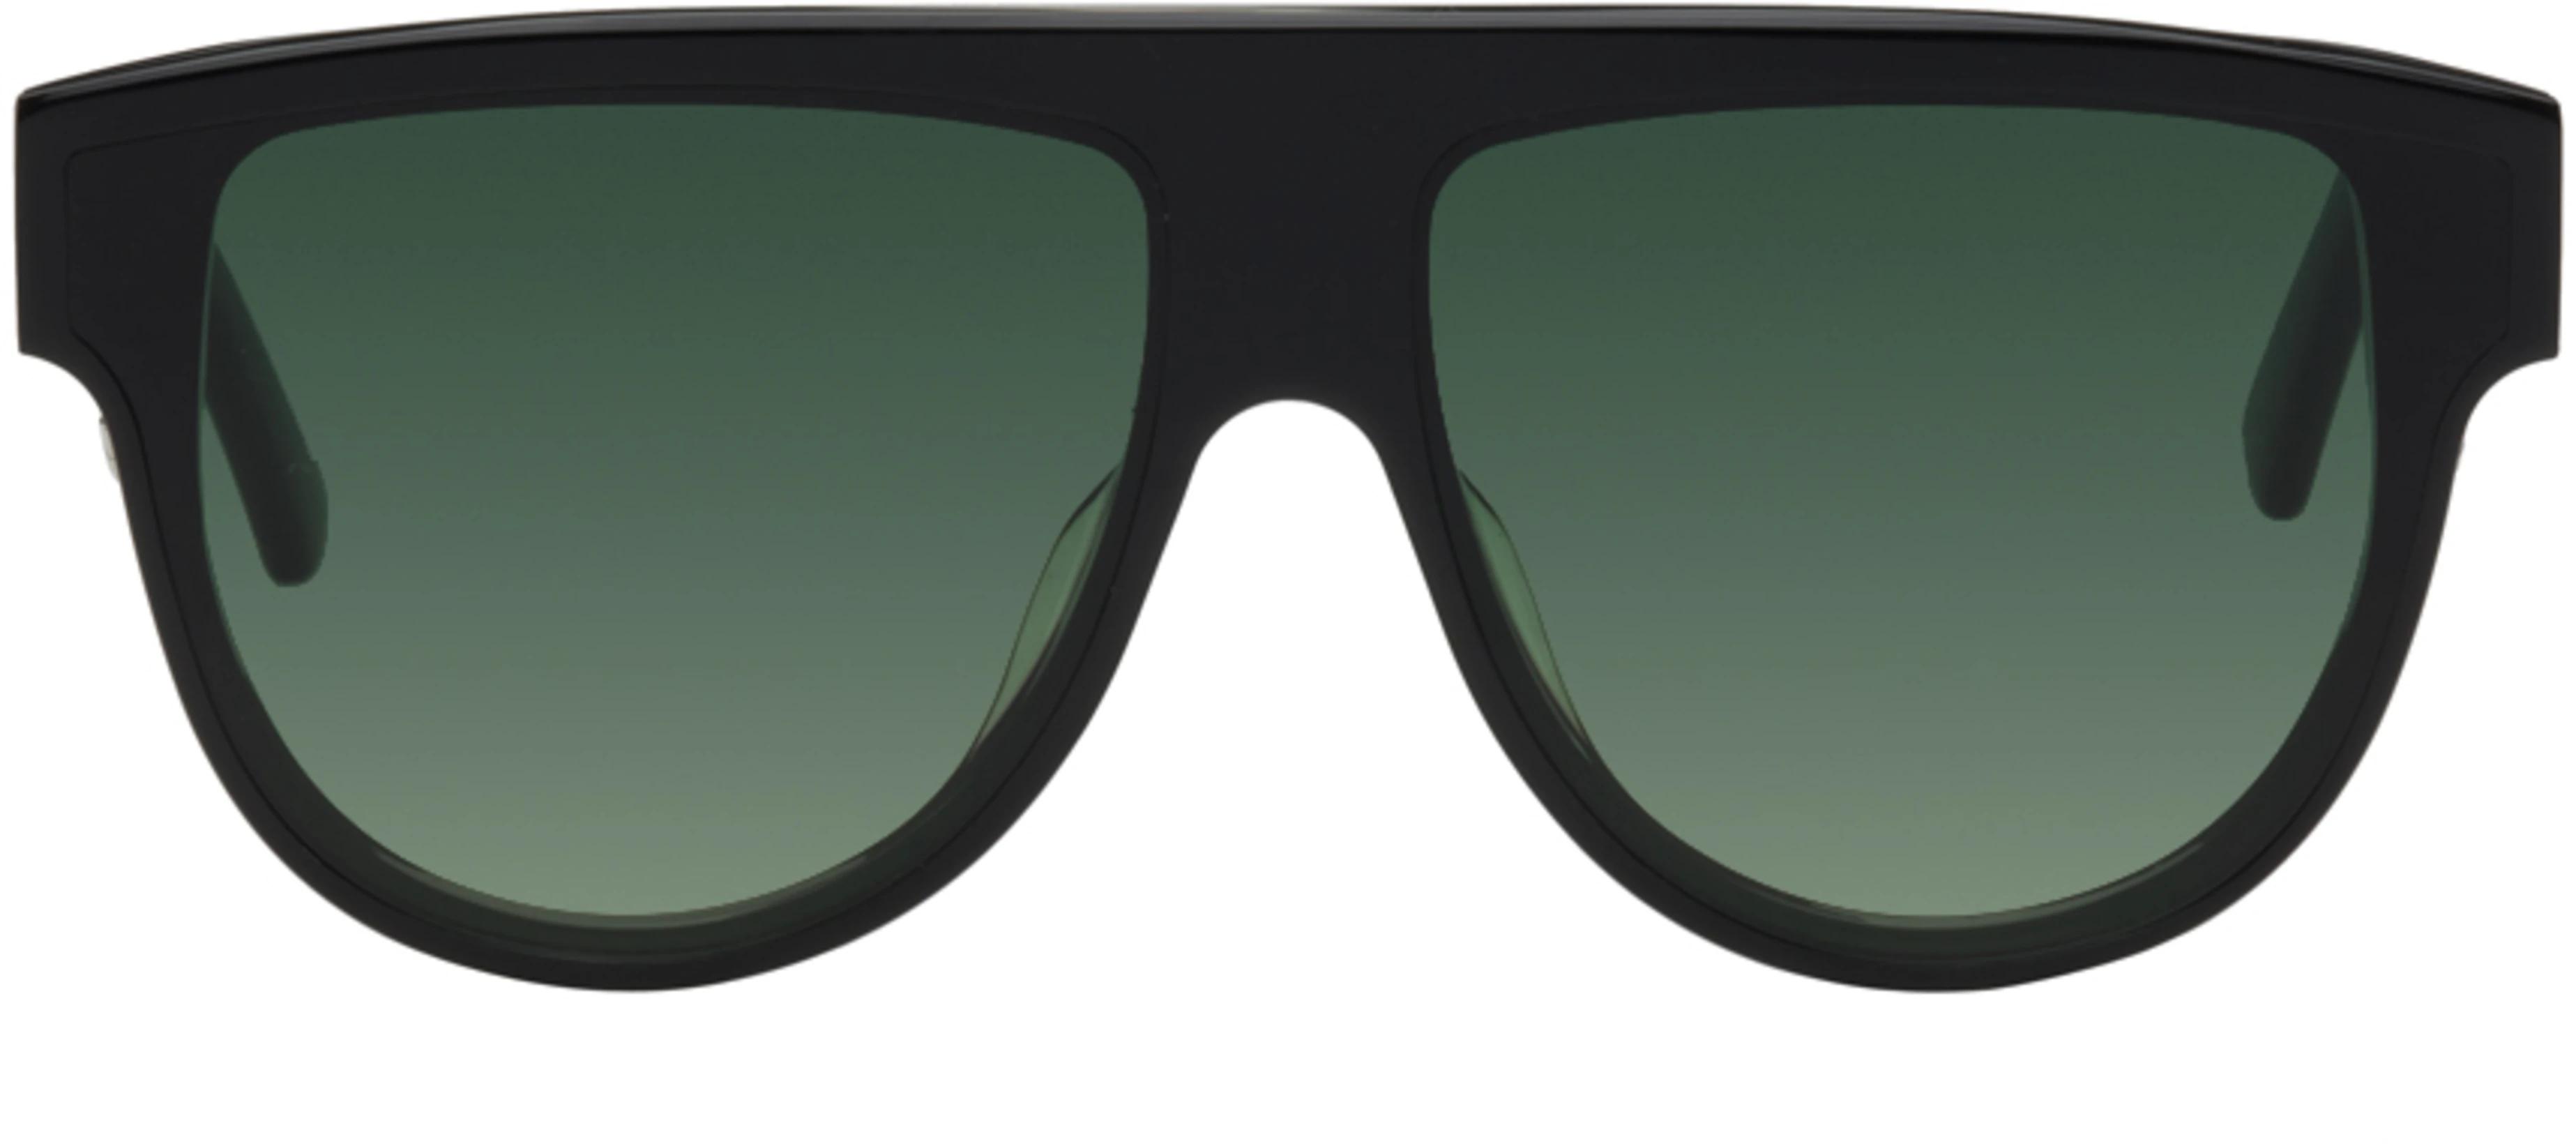 Black Continuum Sunglasses by BONNIE CLYDE